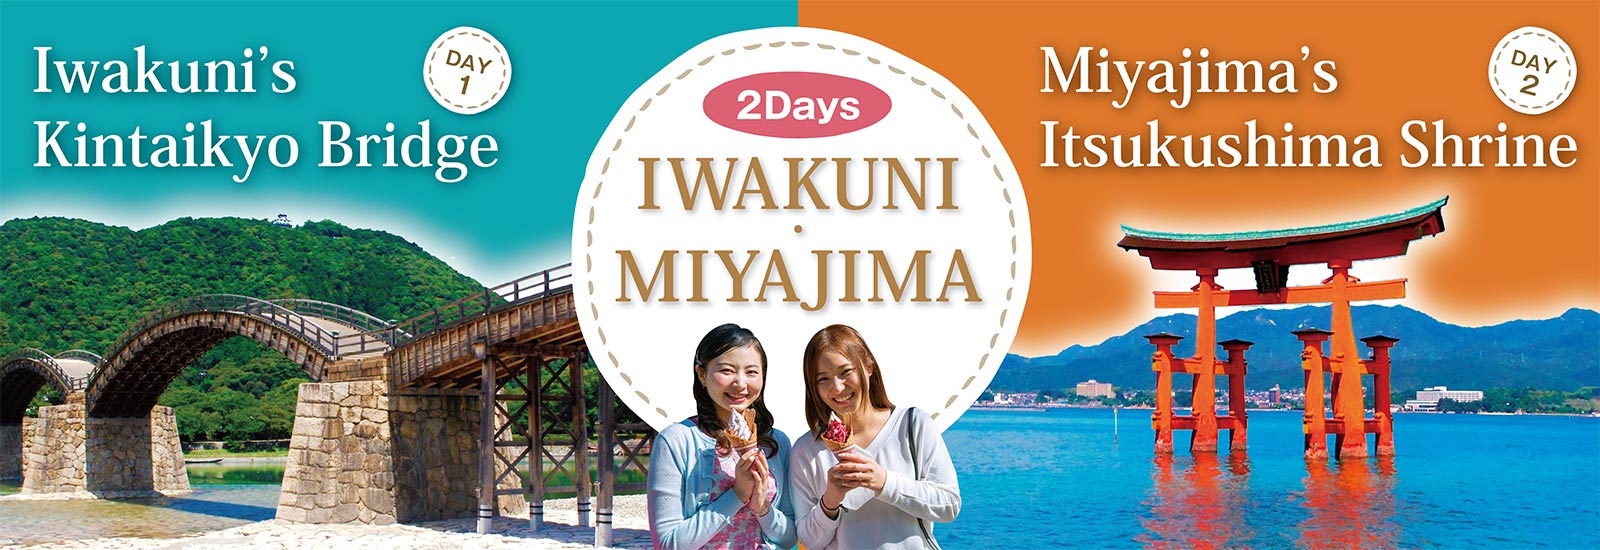 Iwakuni-Miyajima 2days image photo